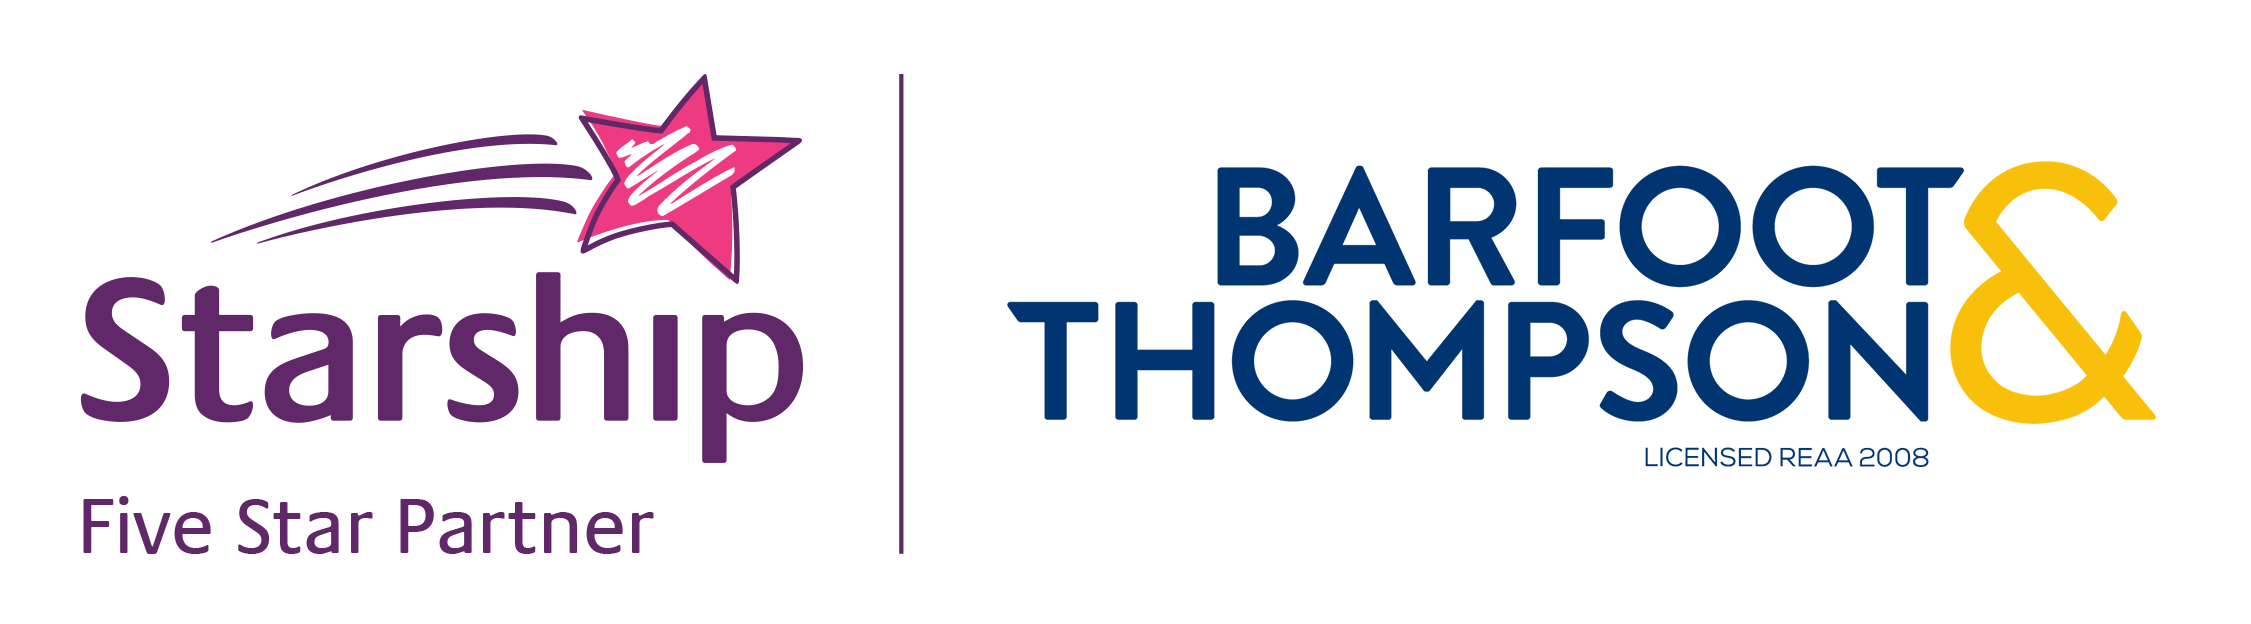 B&T logo 